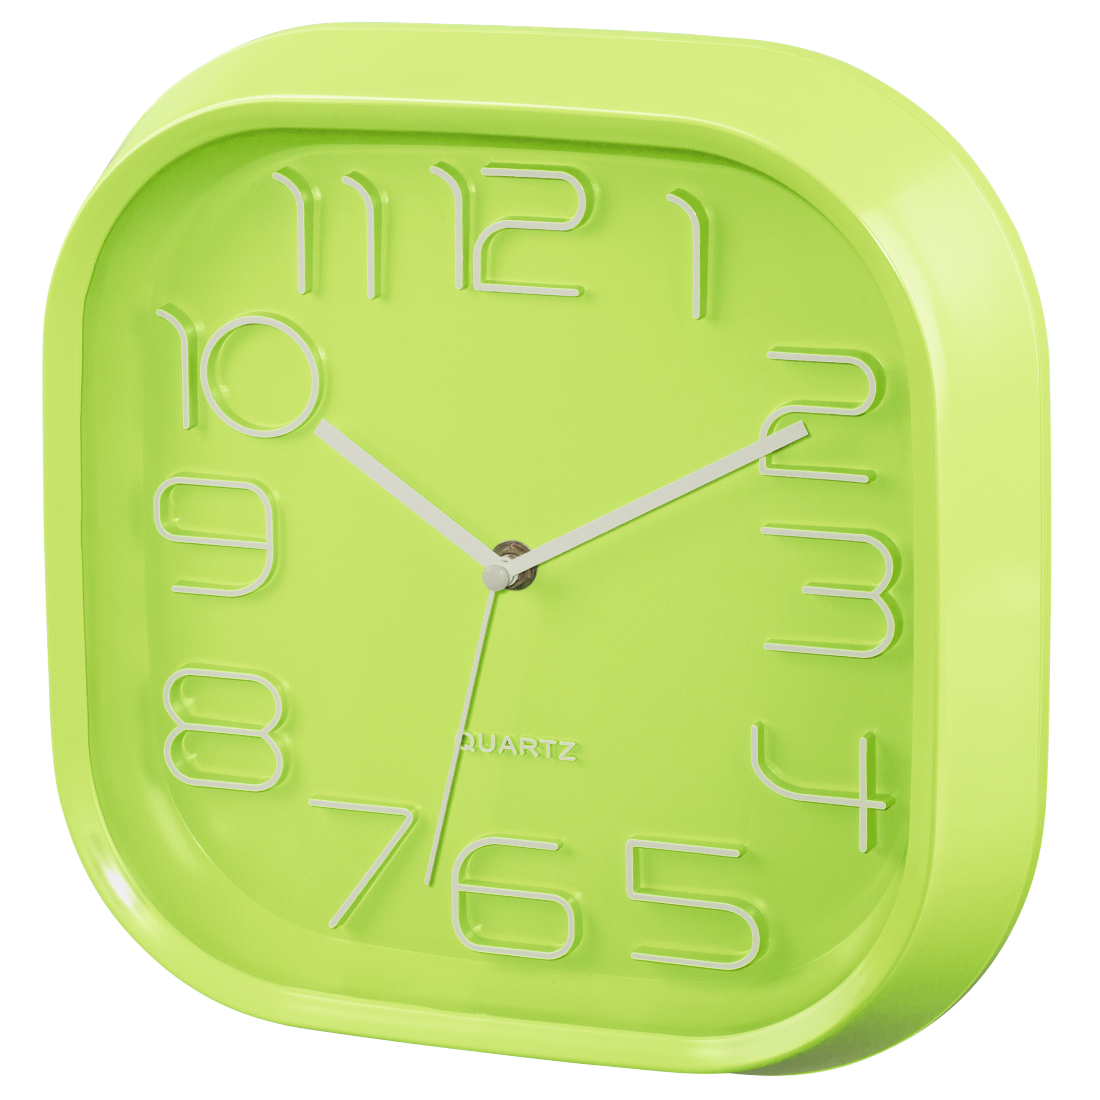 Green Wall Clock PNG Transparent Image